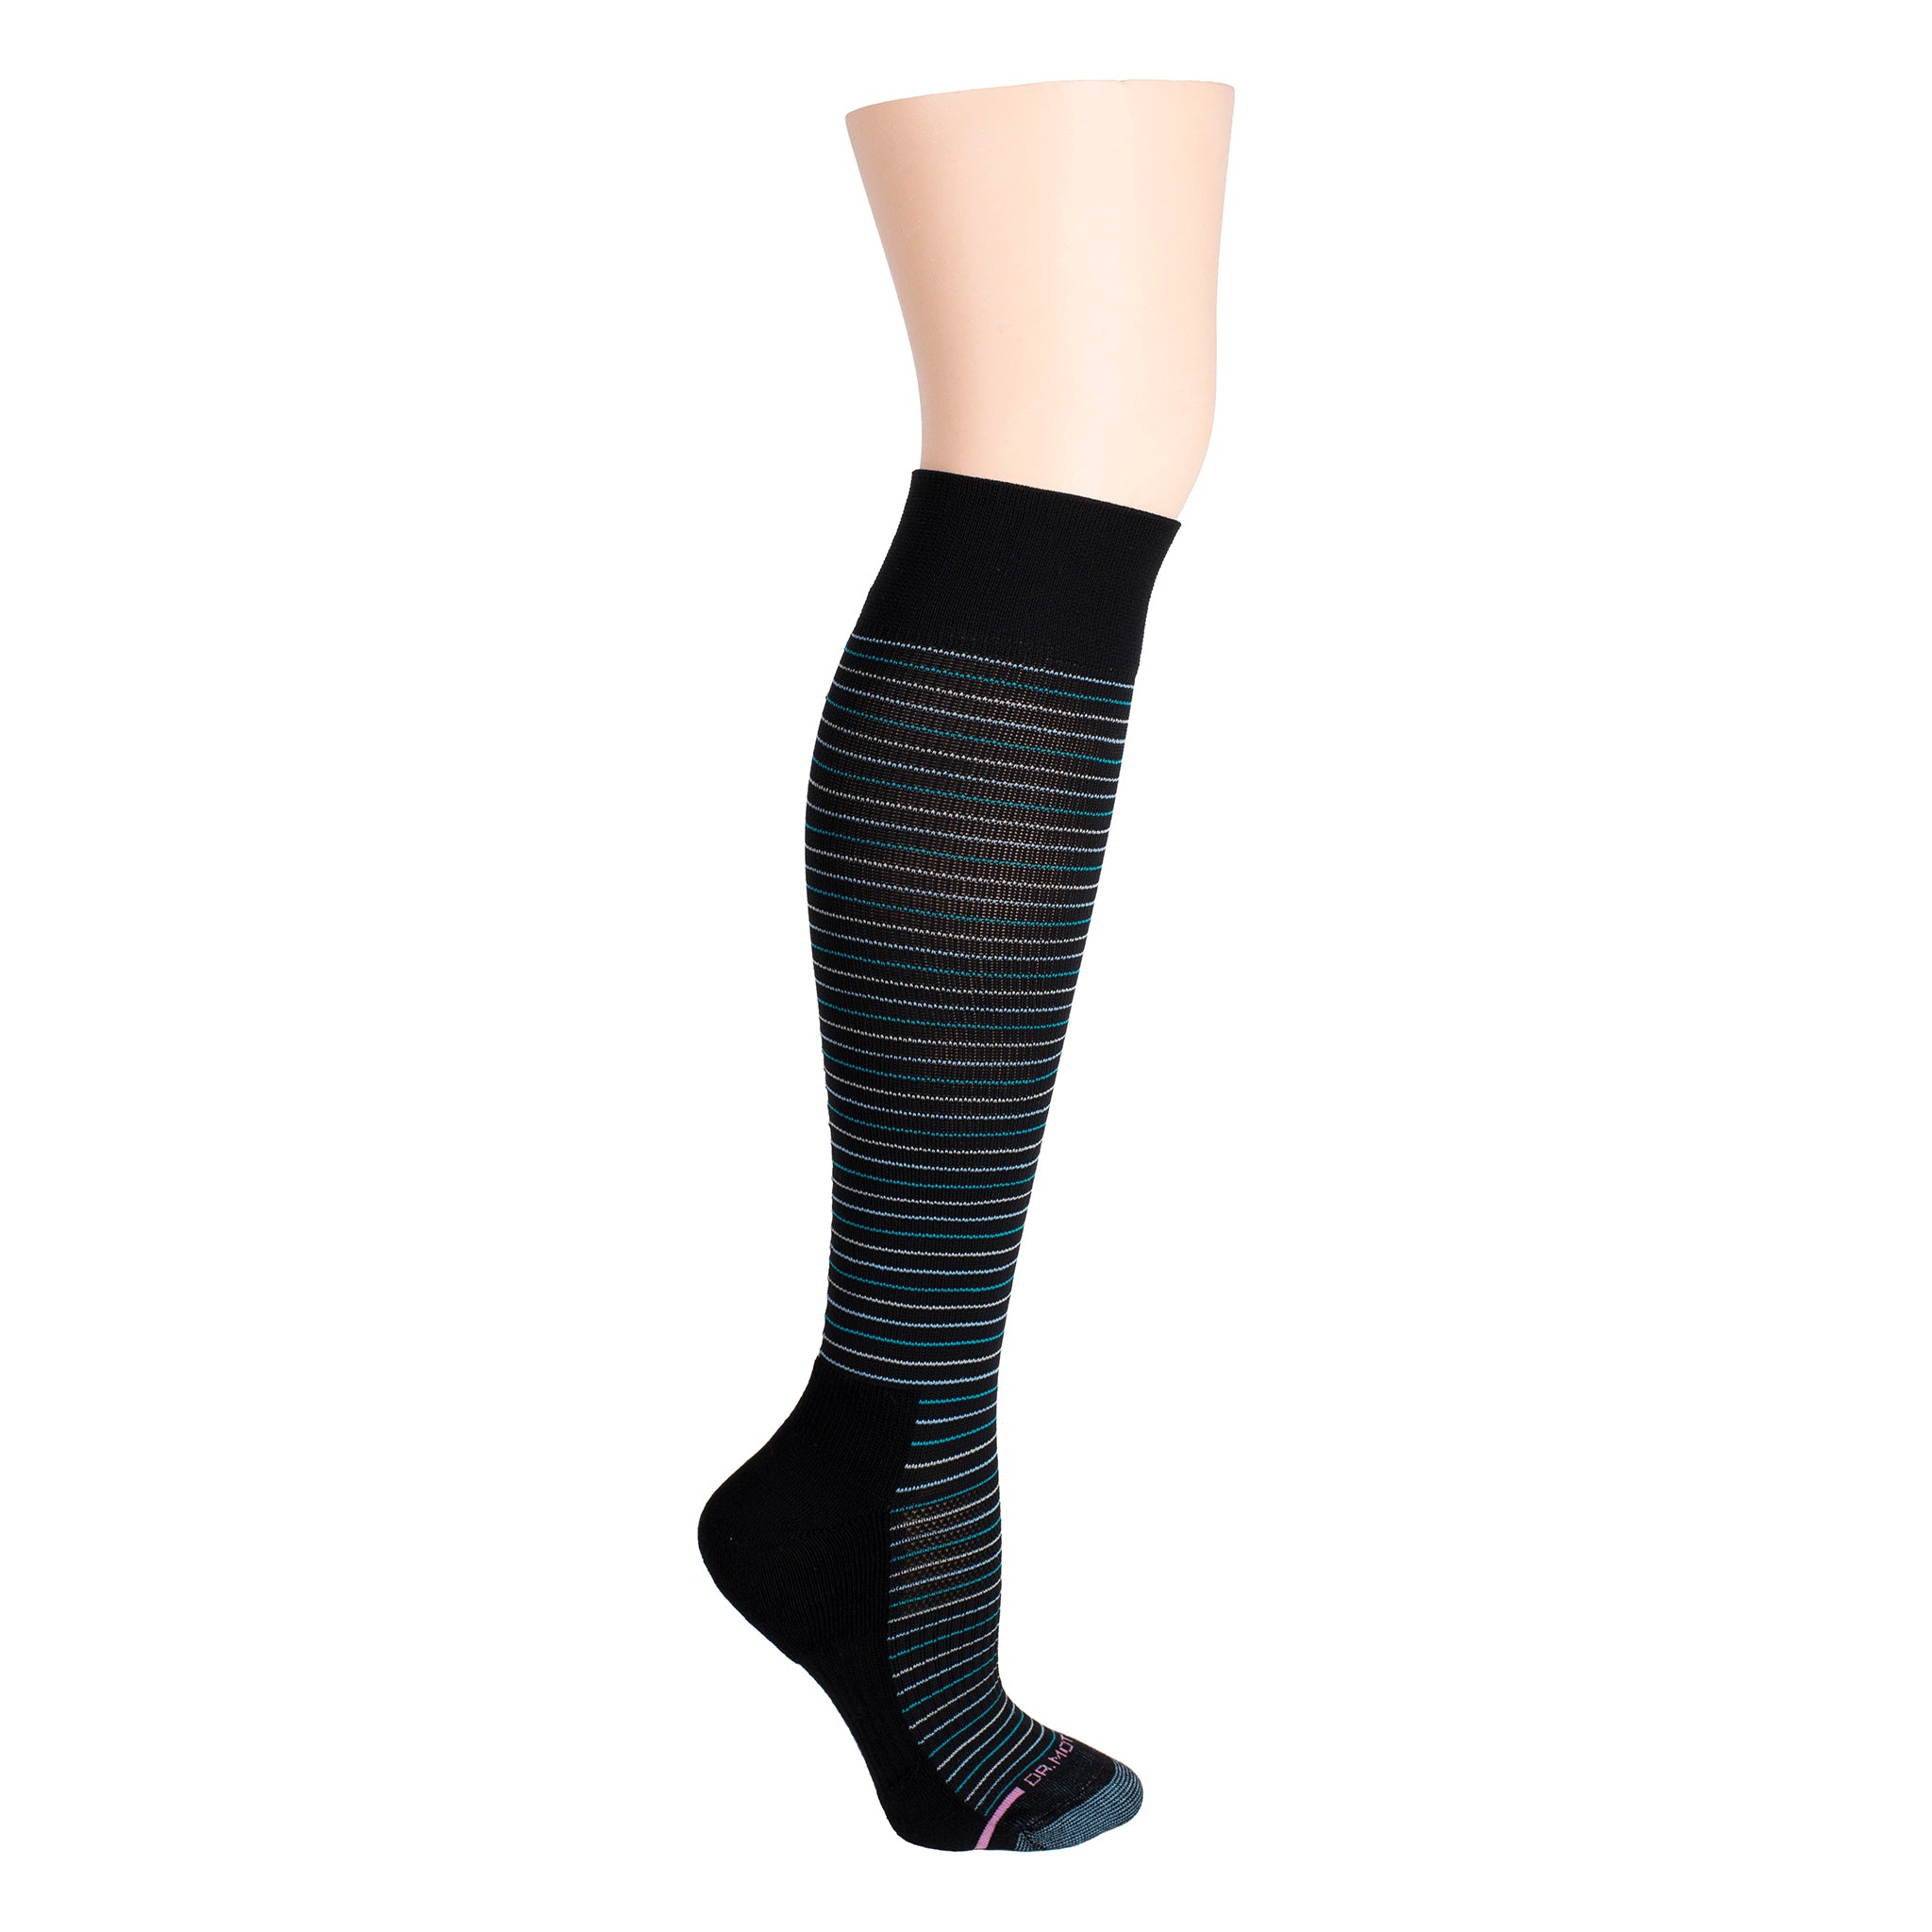  THERAFIRMLIGHT Women's Knee High Support Stockings